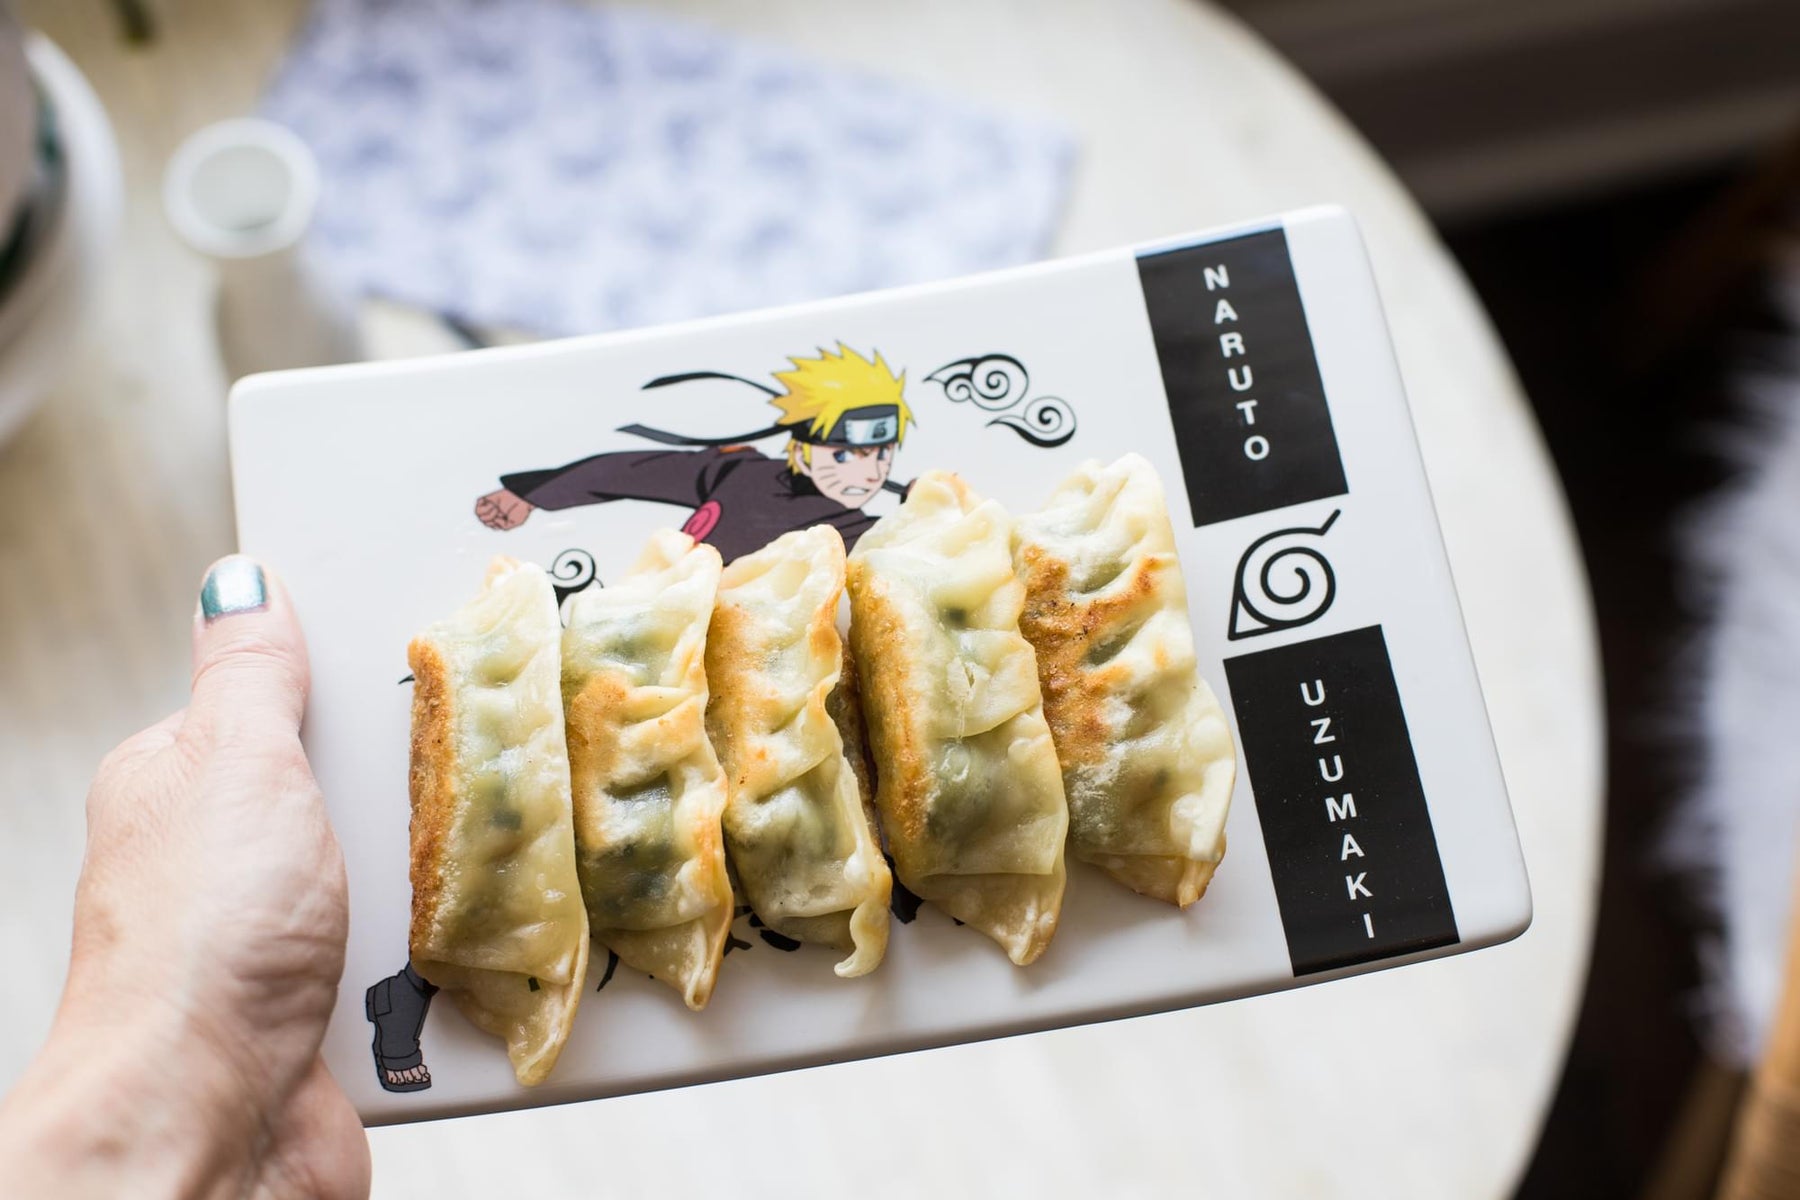 Naruto Shippuden 3-Piece Ceramic Dinnerware Sushi Set